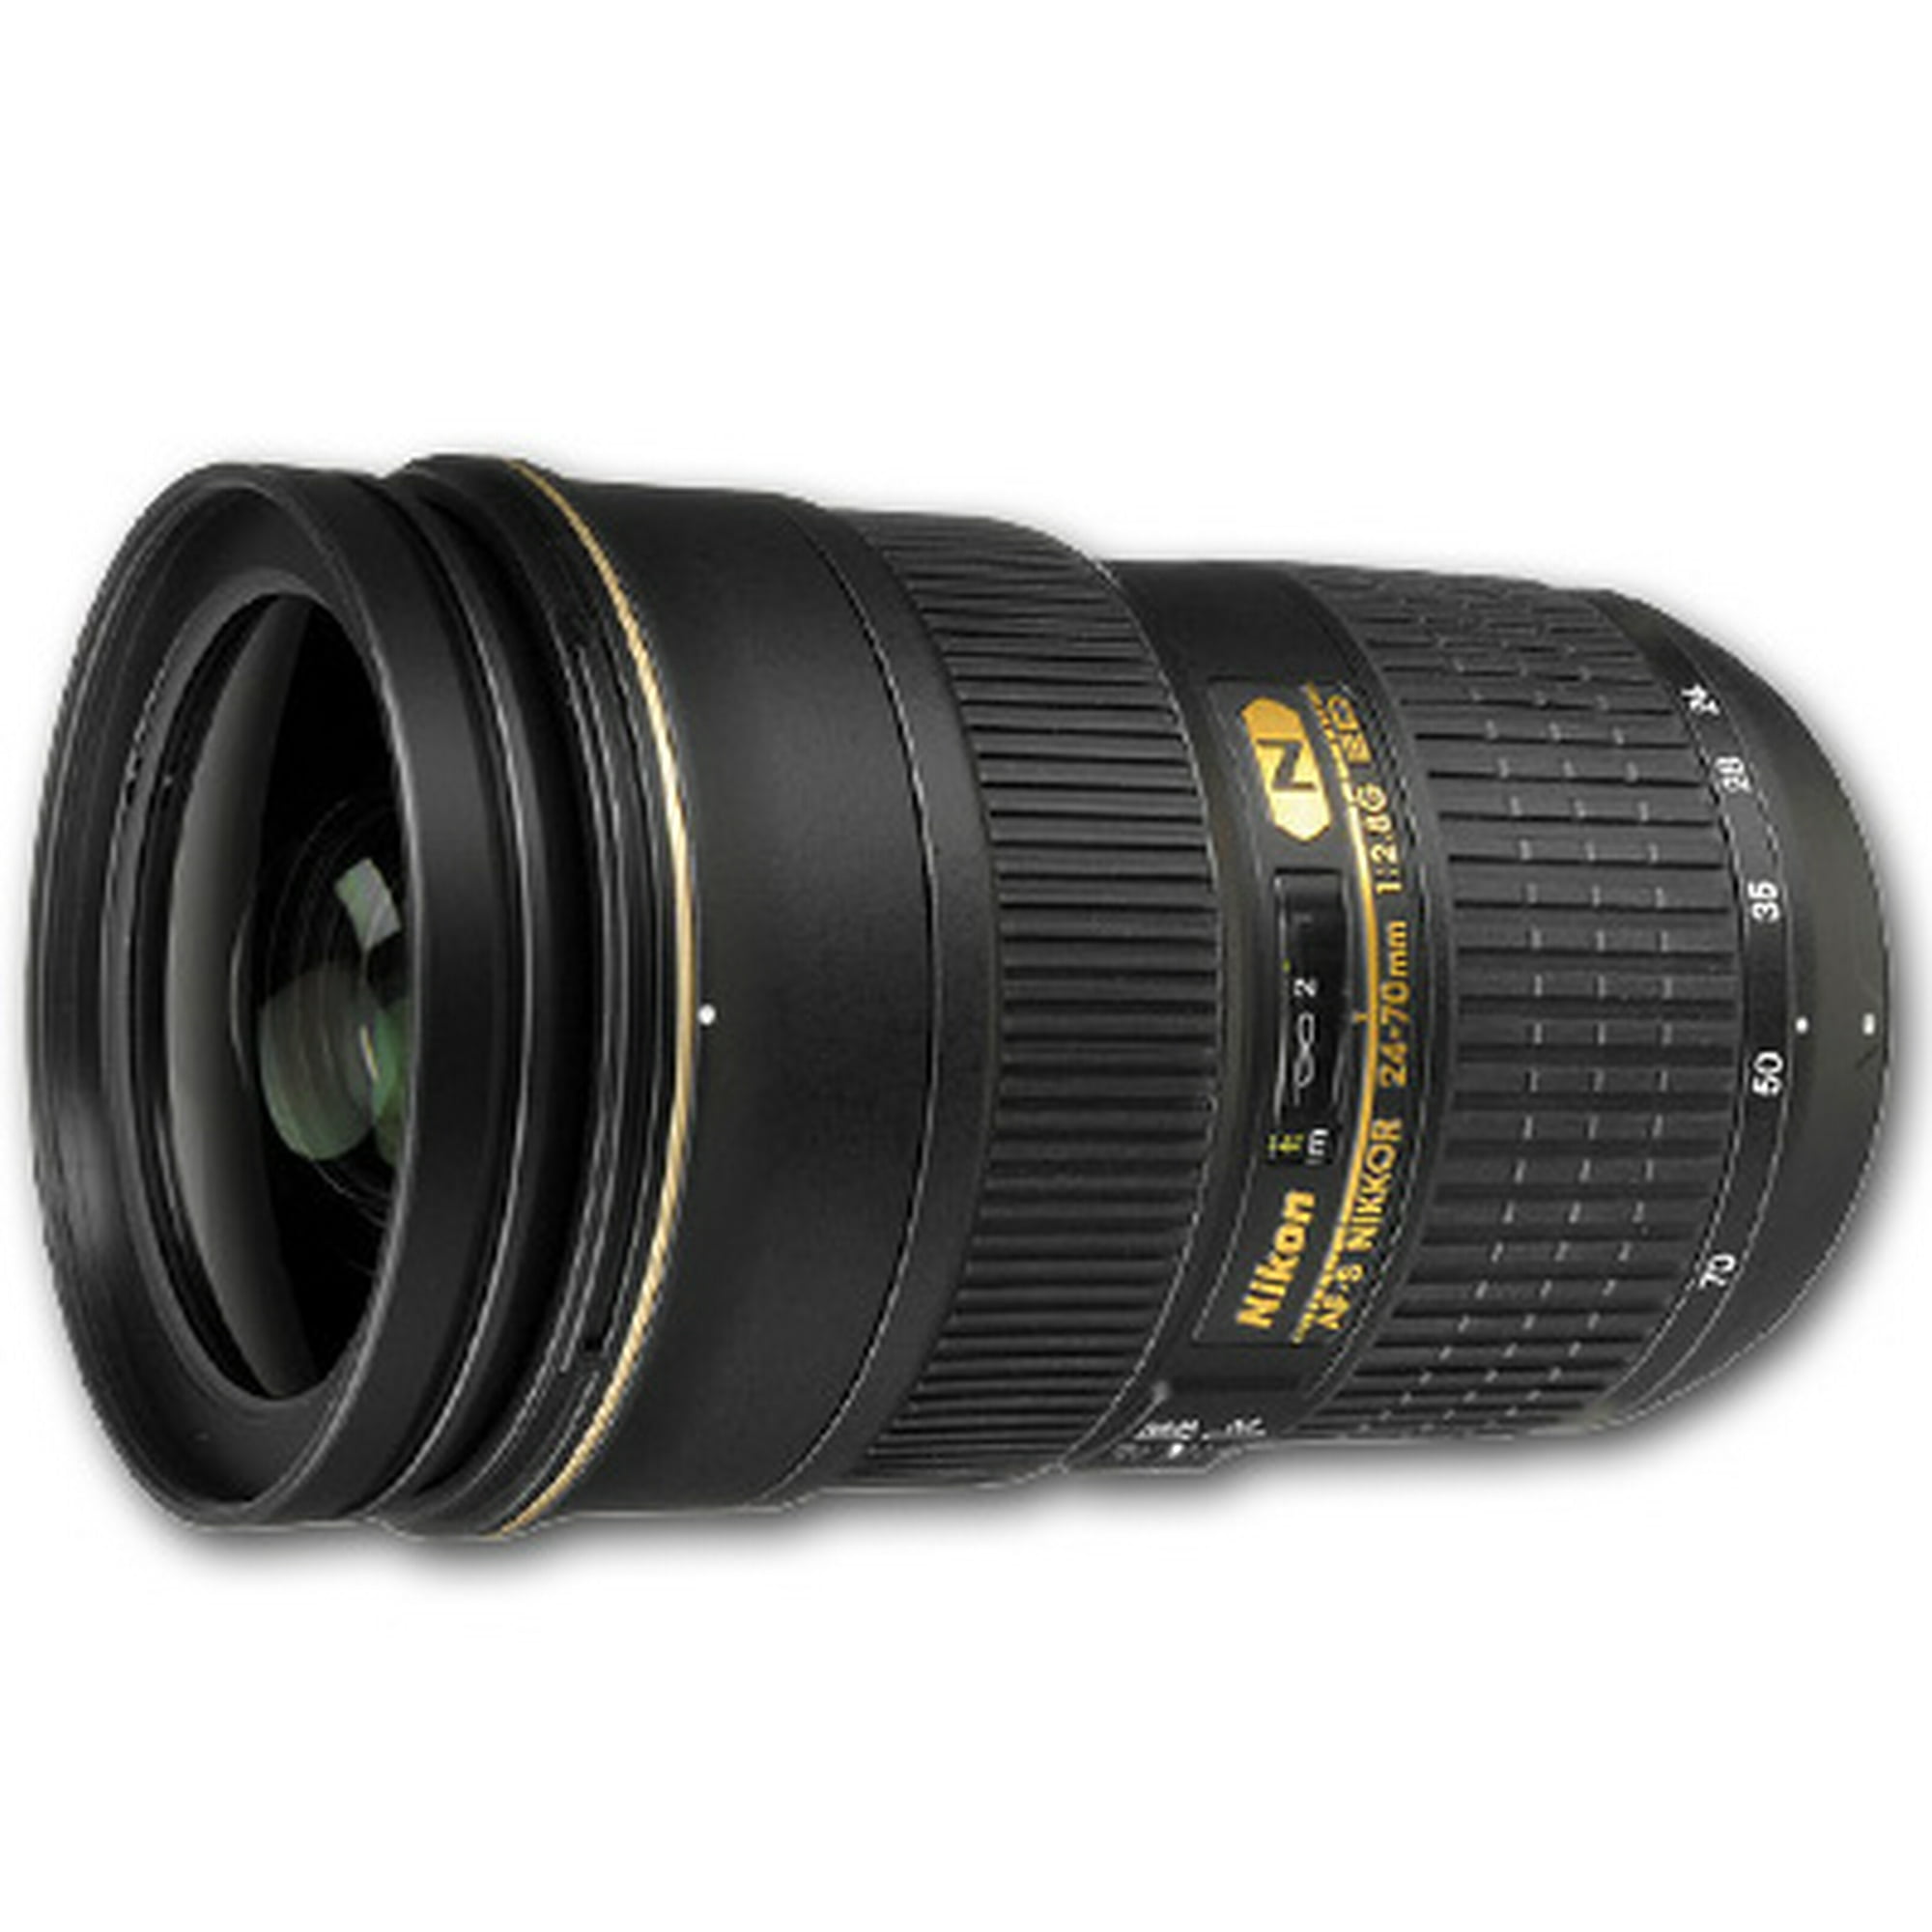 Nikon 24-70mm f2.8 G AF-S Lens | Walmart Canada